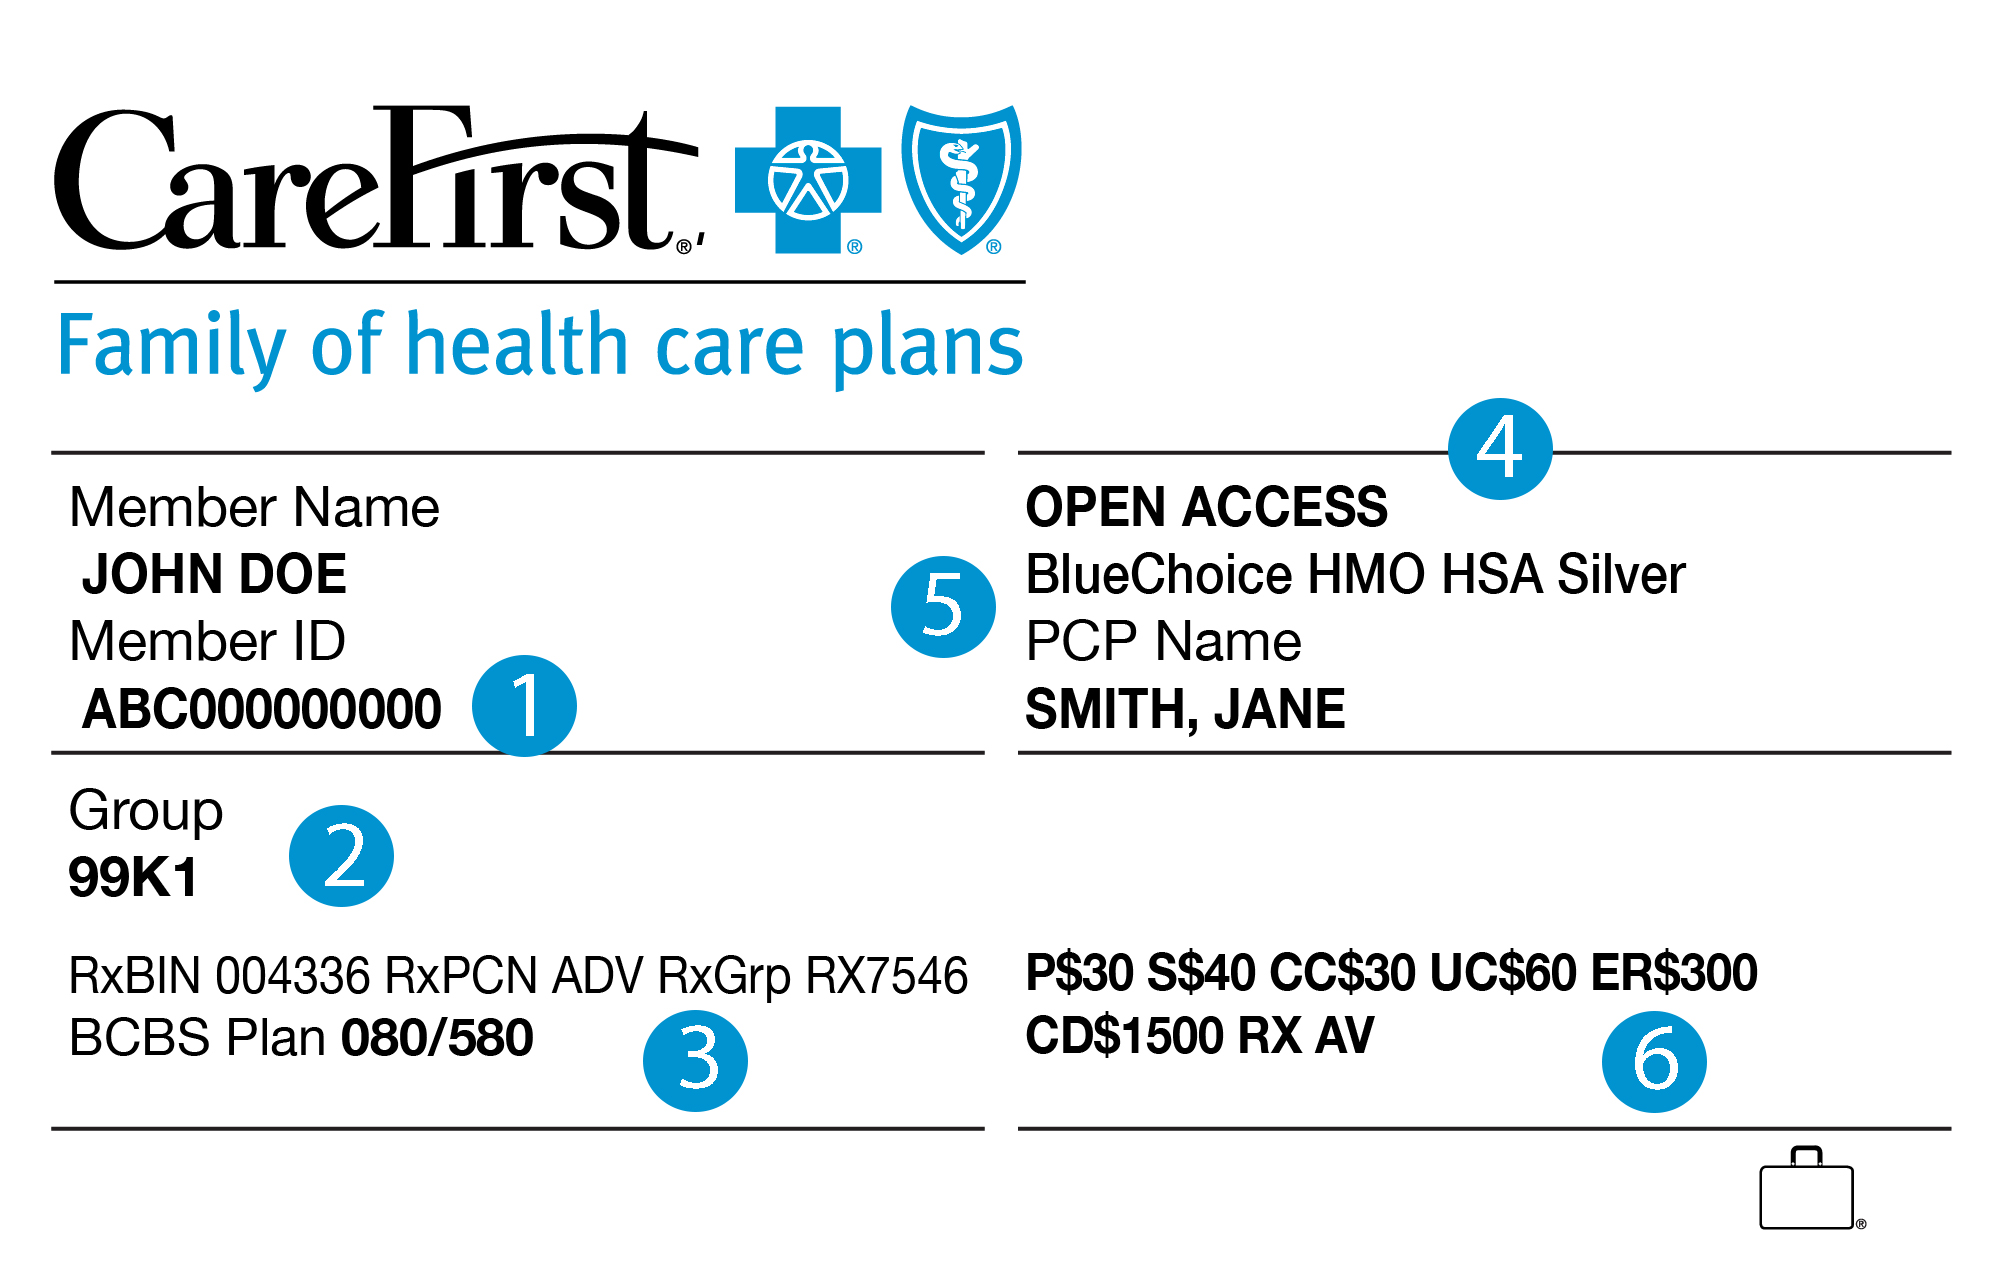 Carefirst blue cross blue shield data center centers plan for healthy living medicare